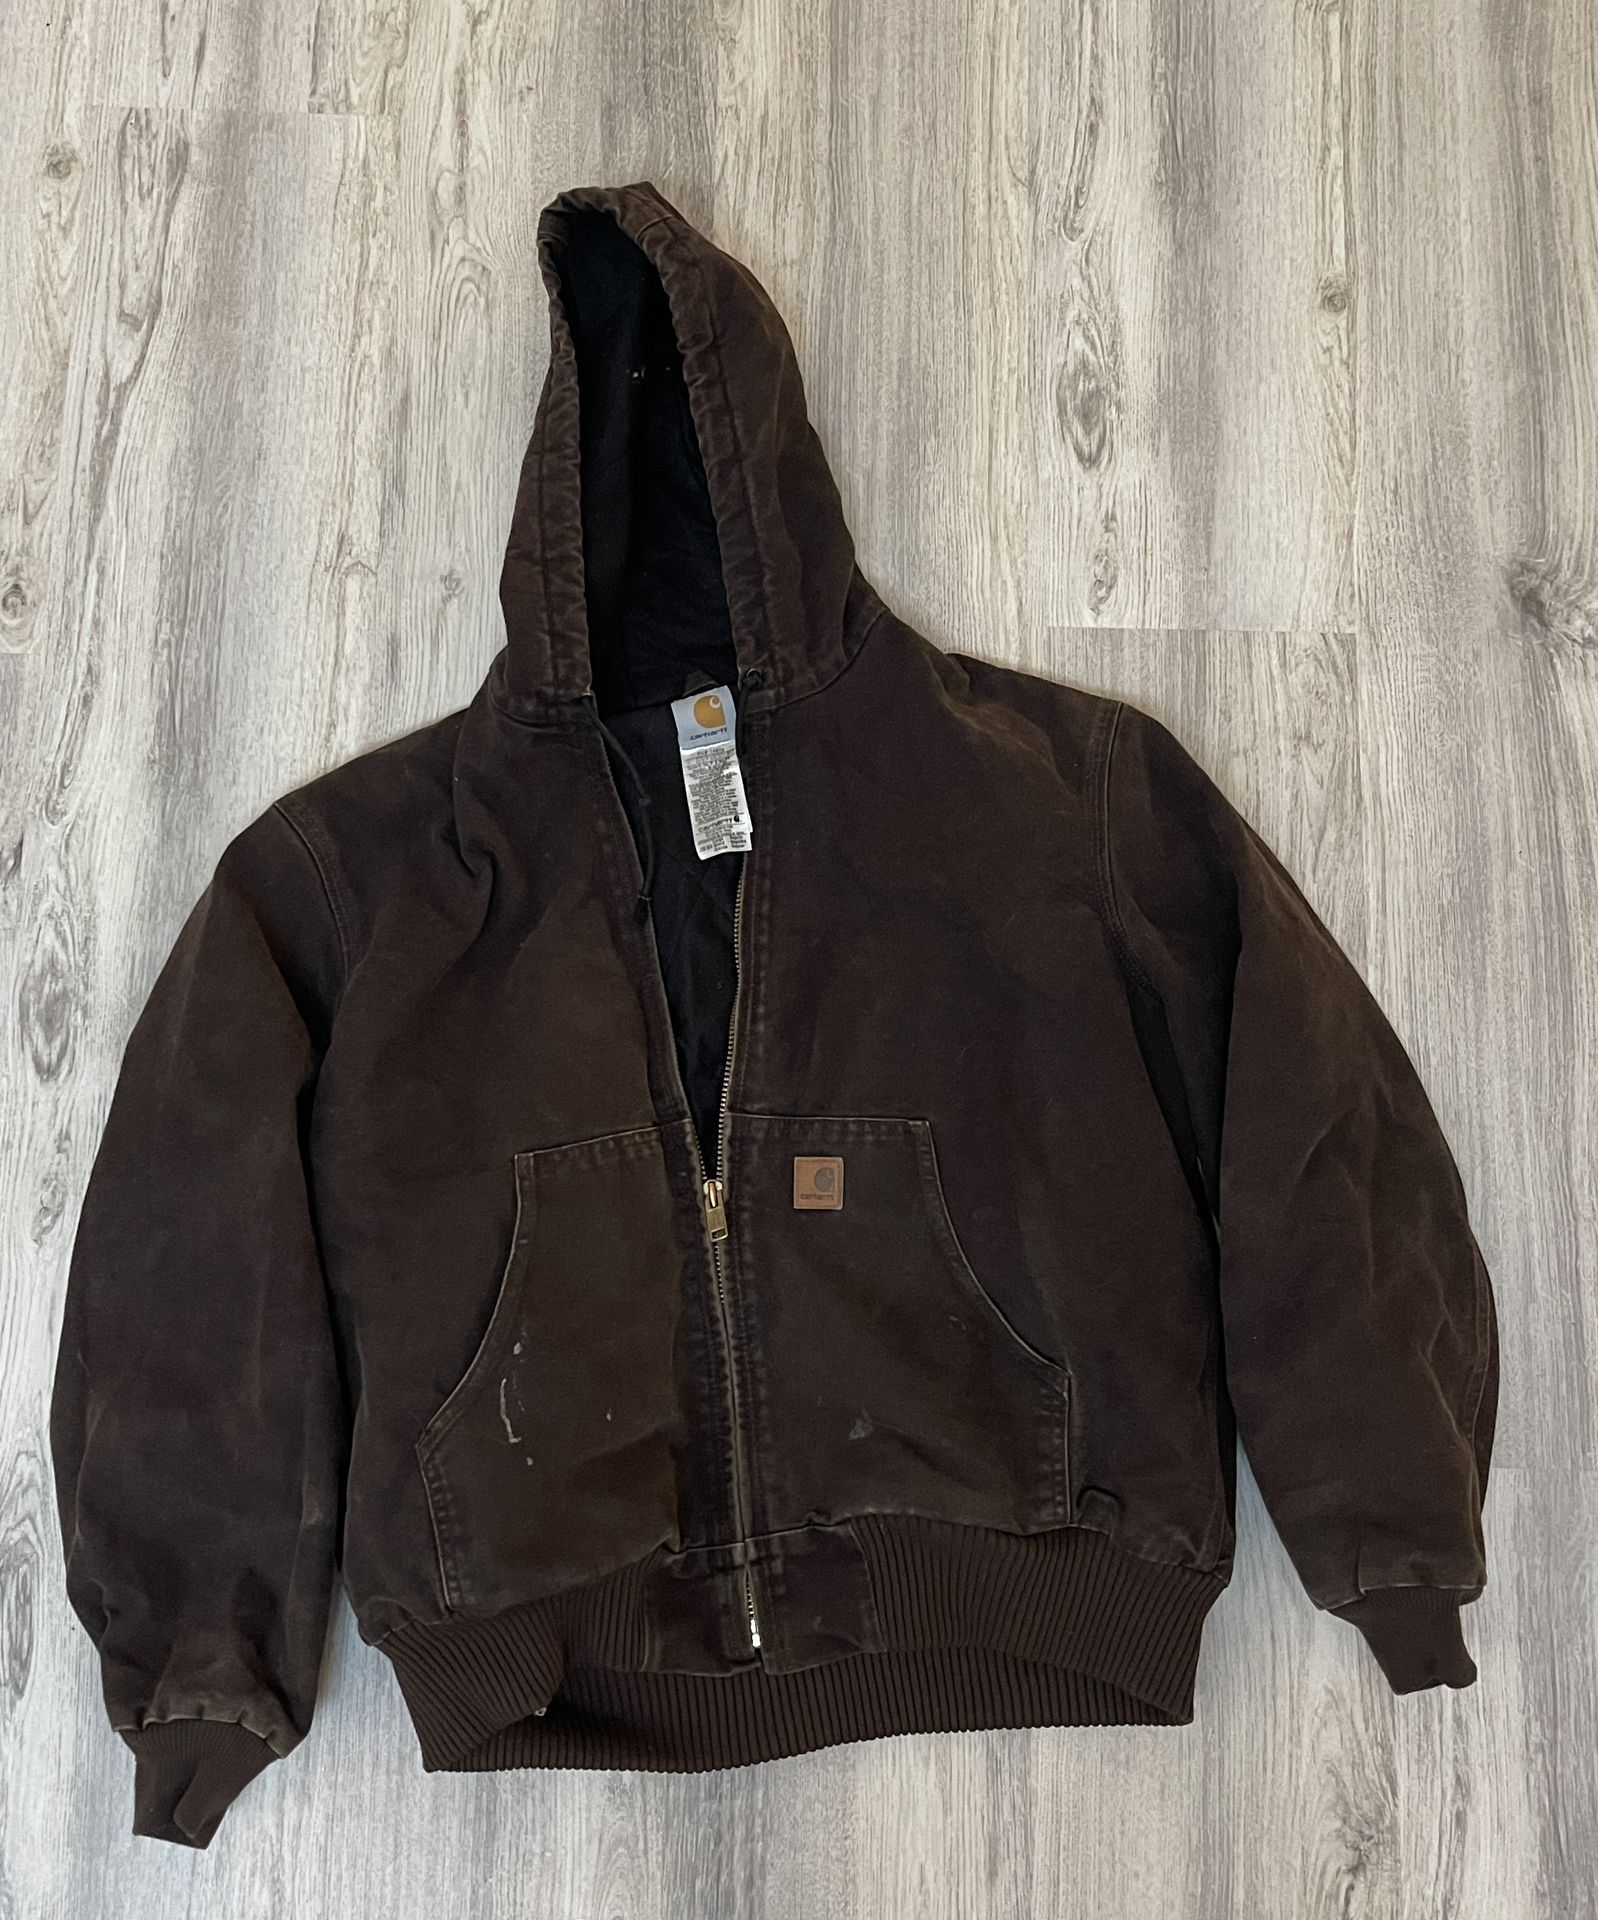 Men's Carhartt Dark Brown insulated hooded work jacket size Large